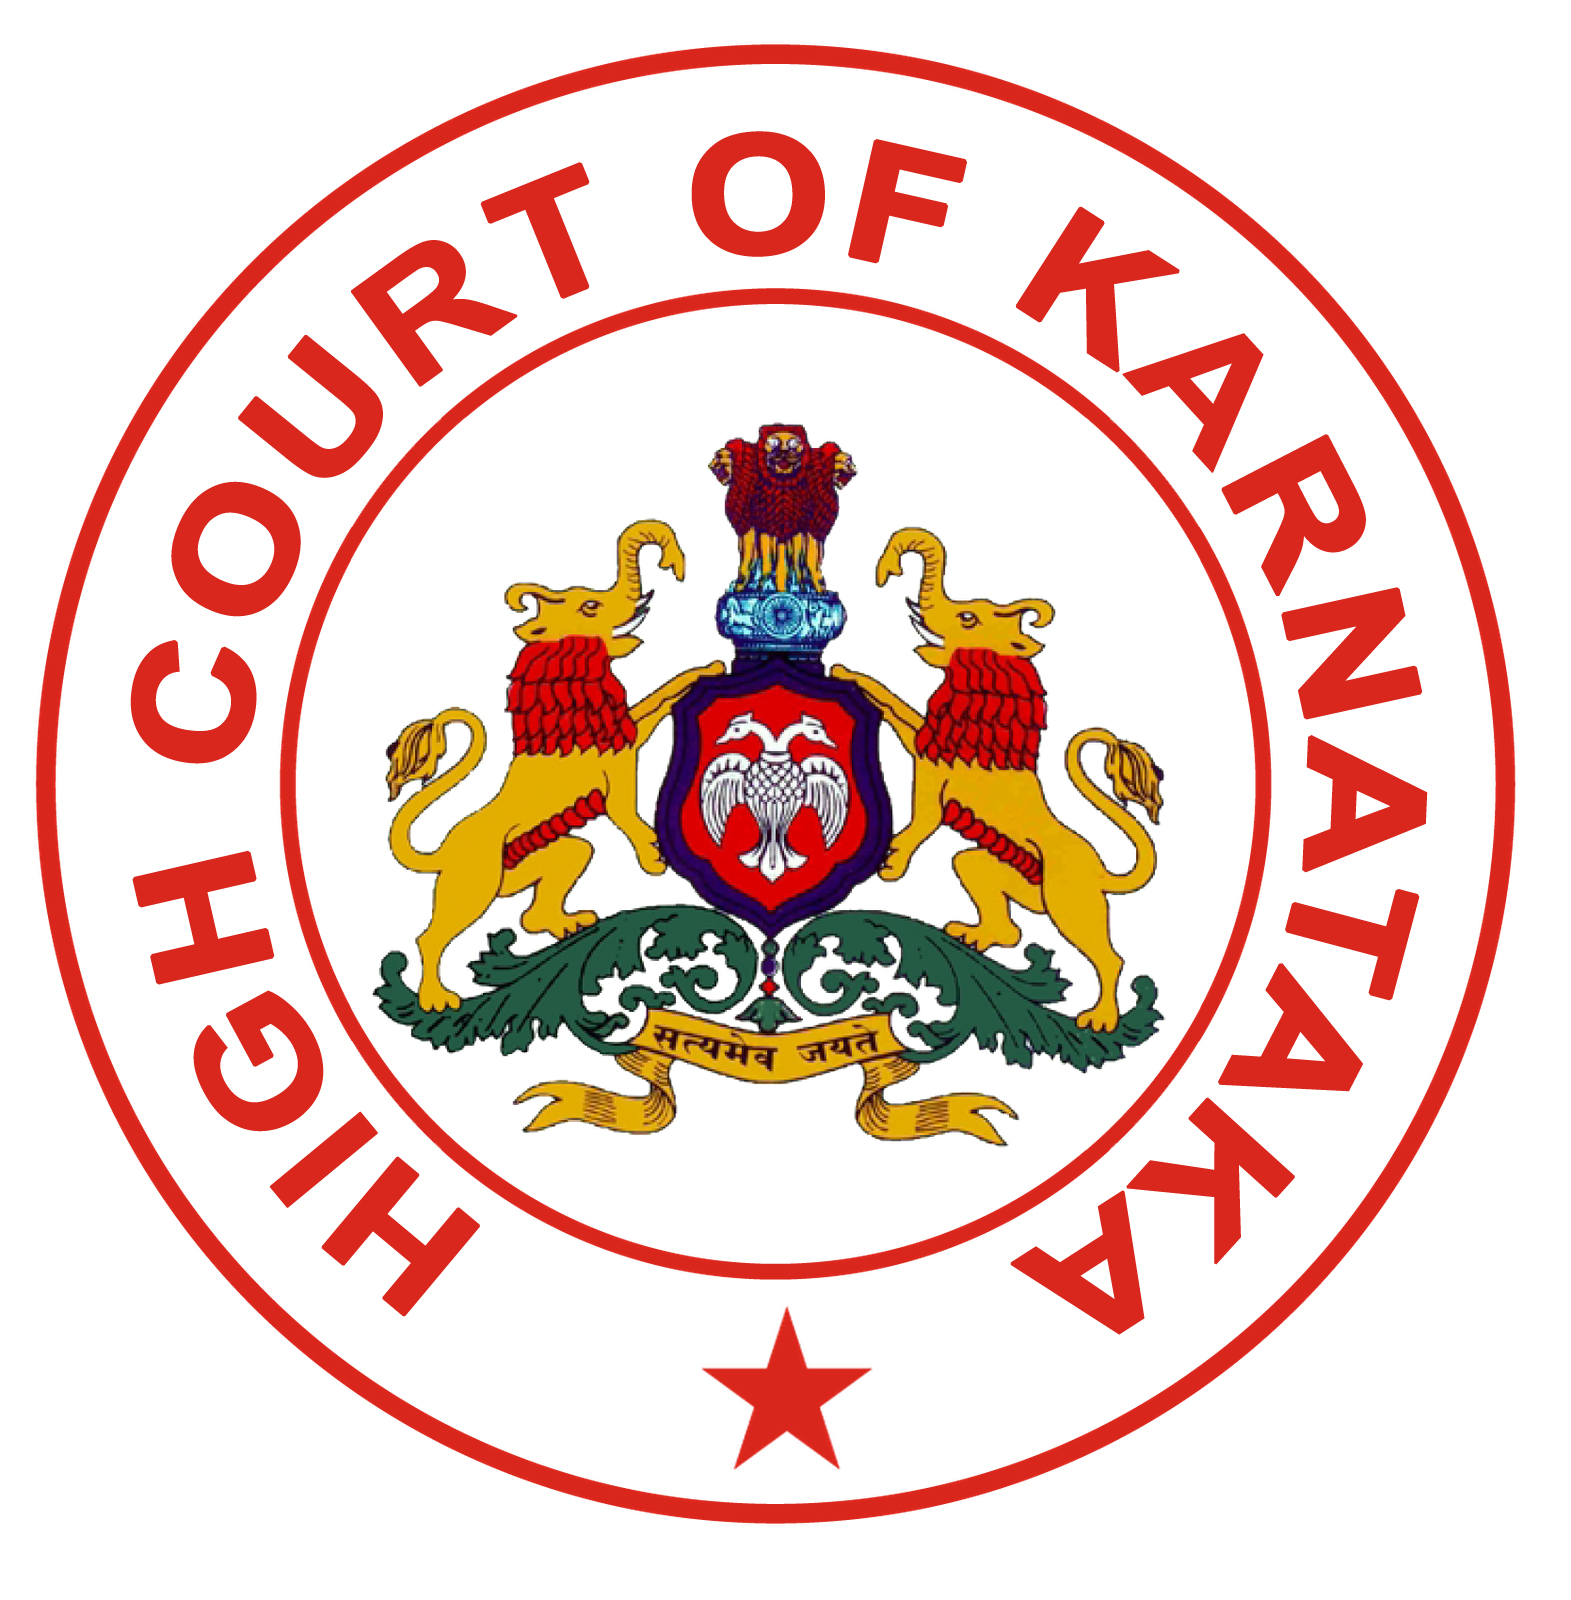 Karnataka Logo Photos, Images and Pictures